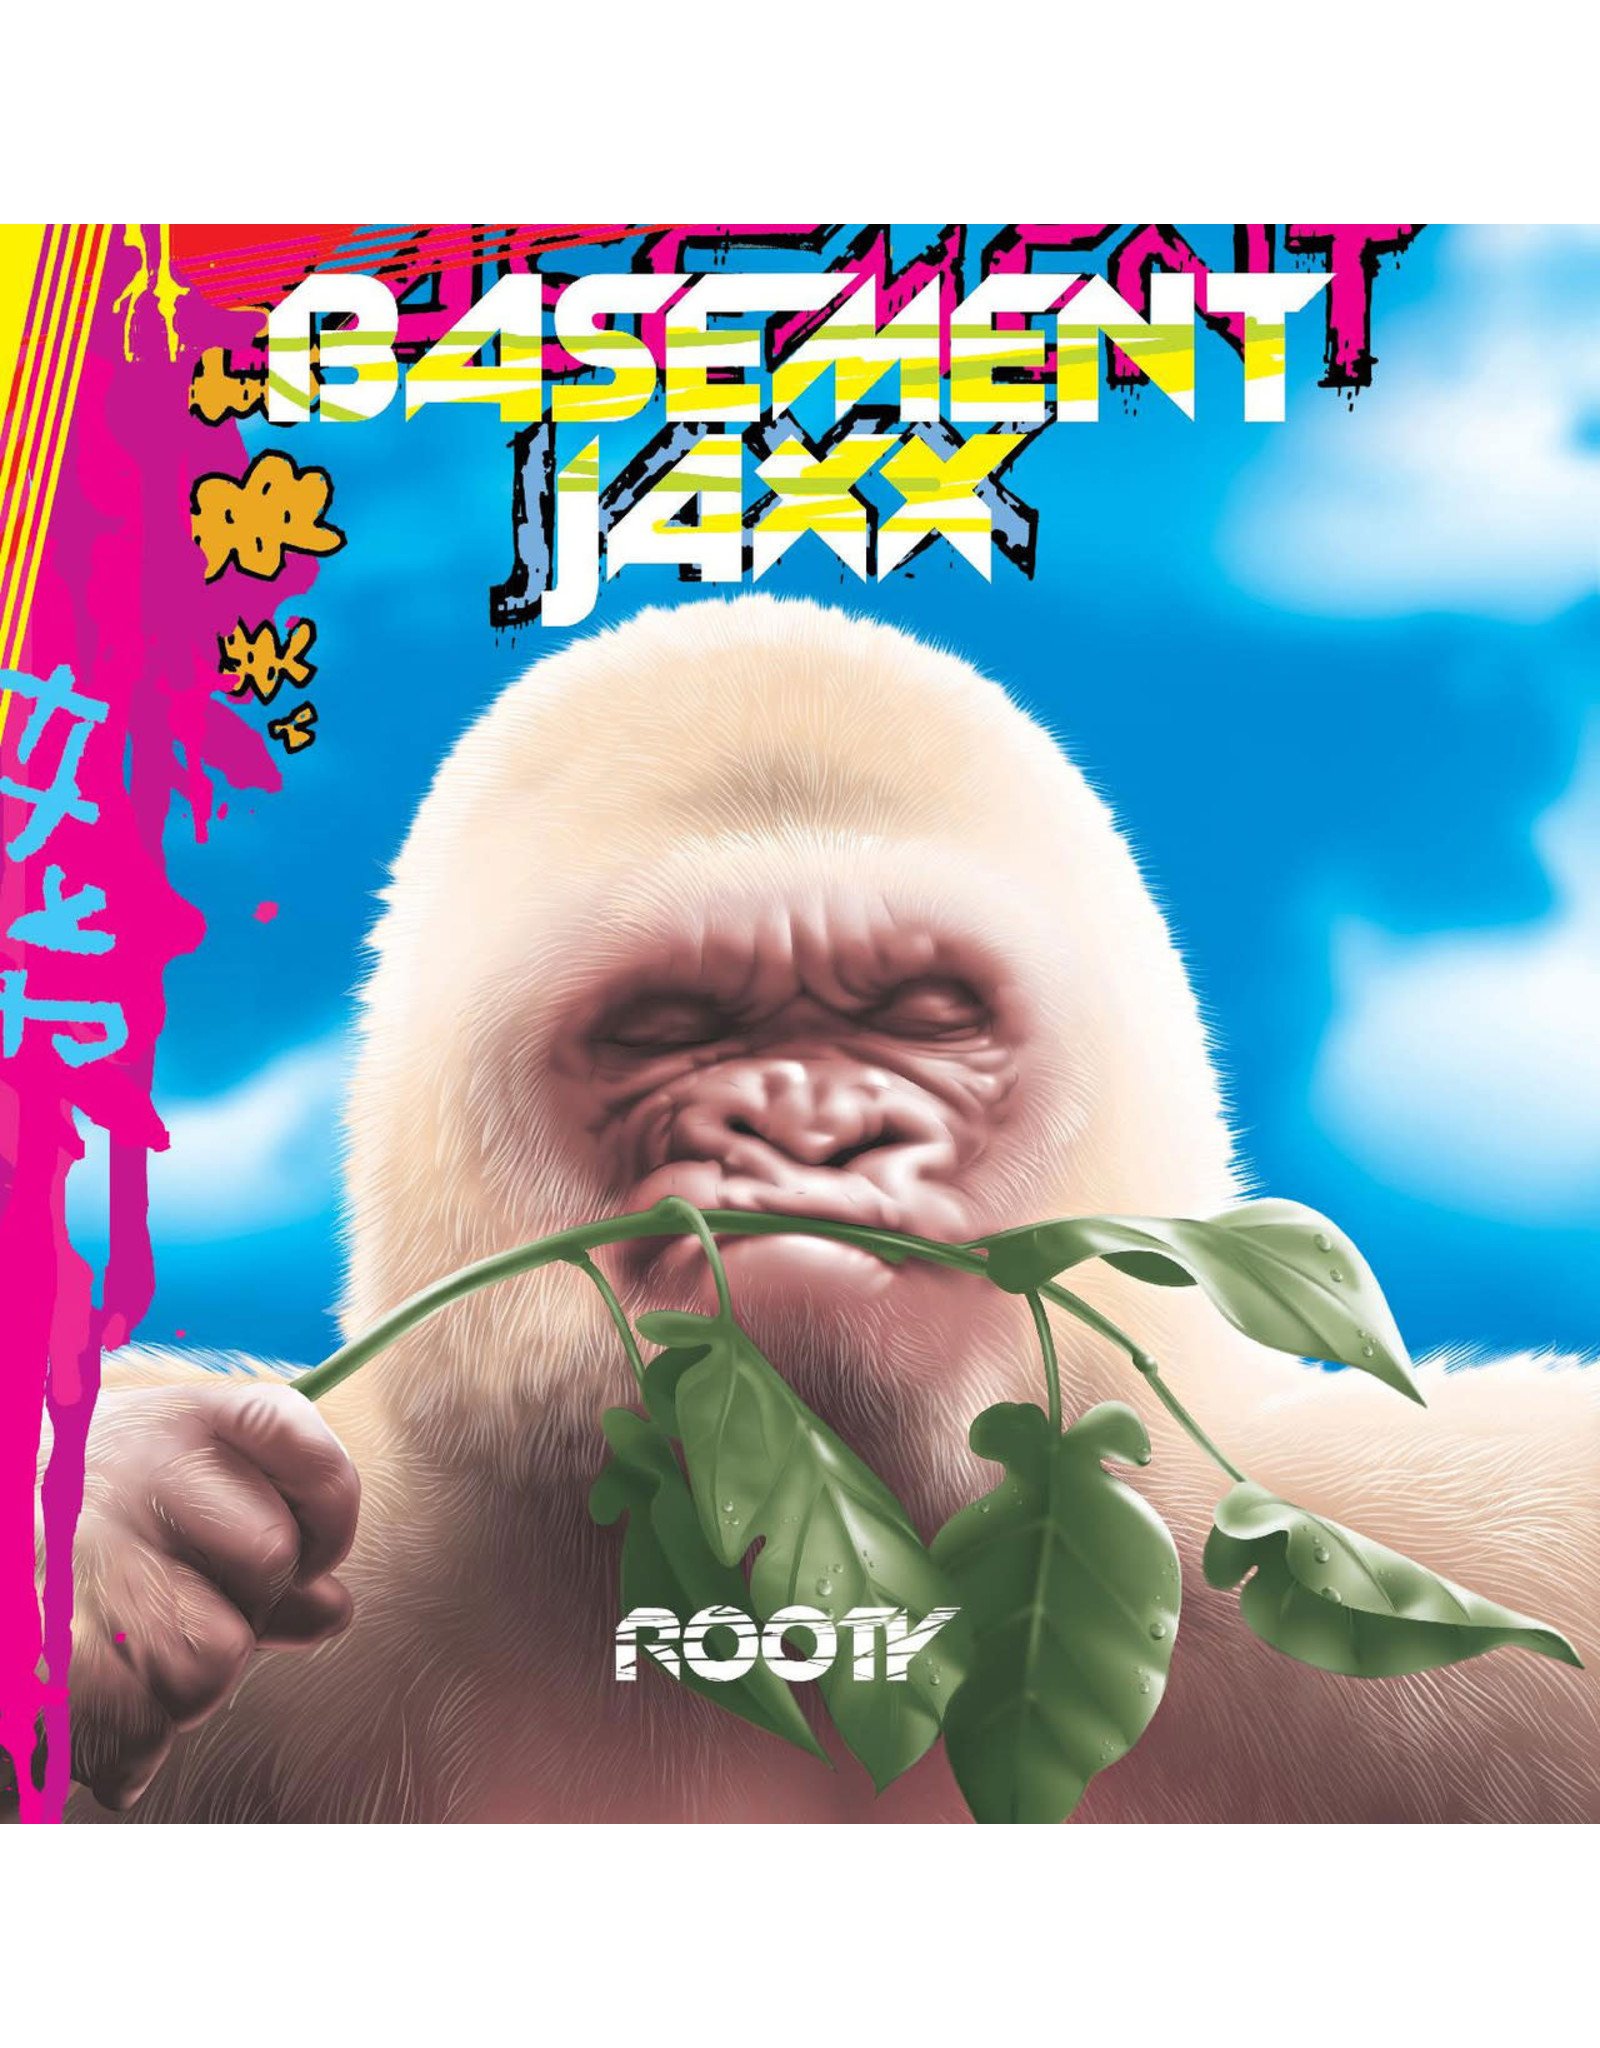 Basement Jaxx - Rooty (Pink & Blue Vinyl)